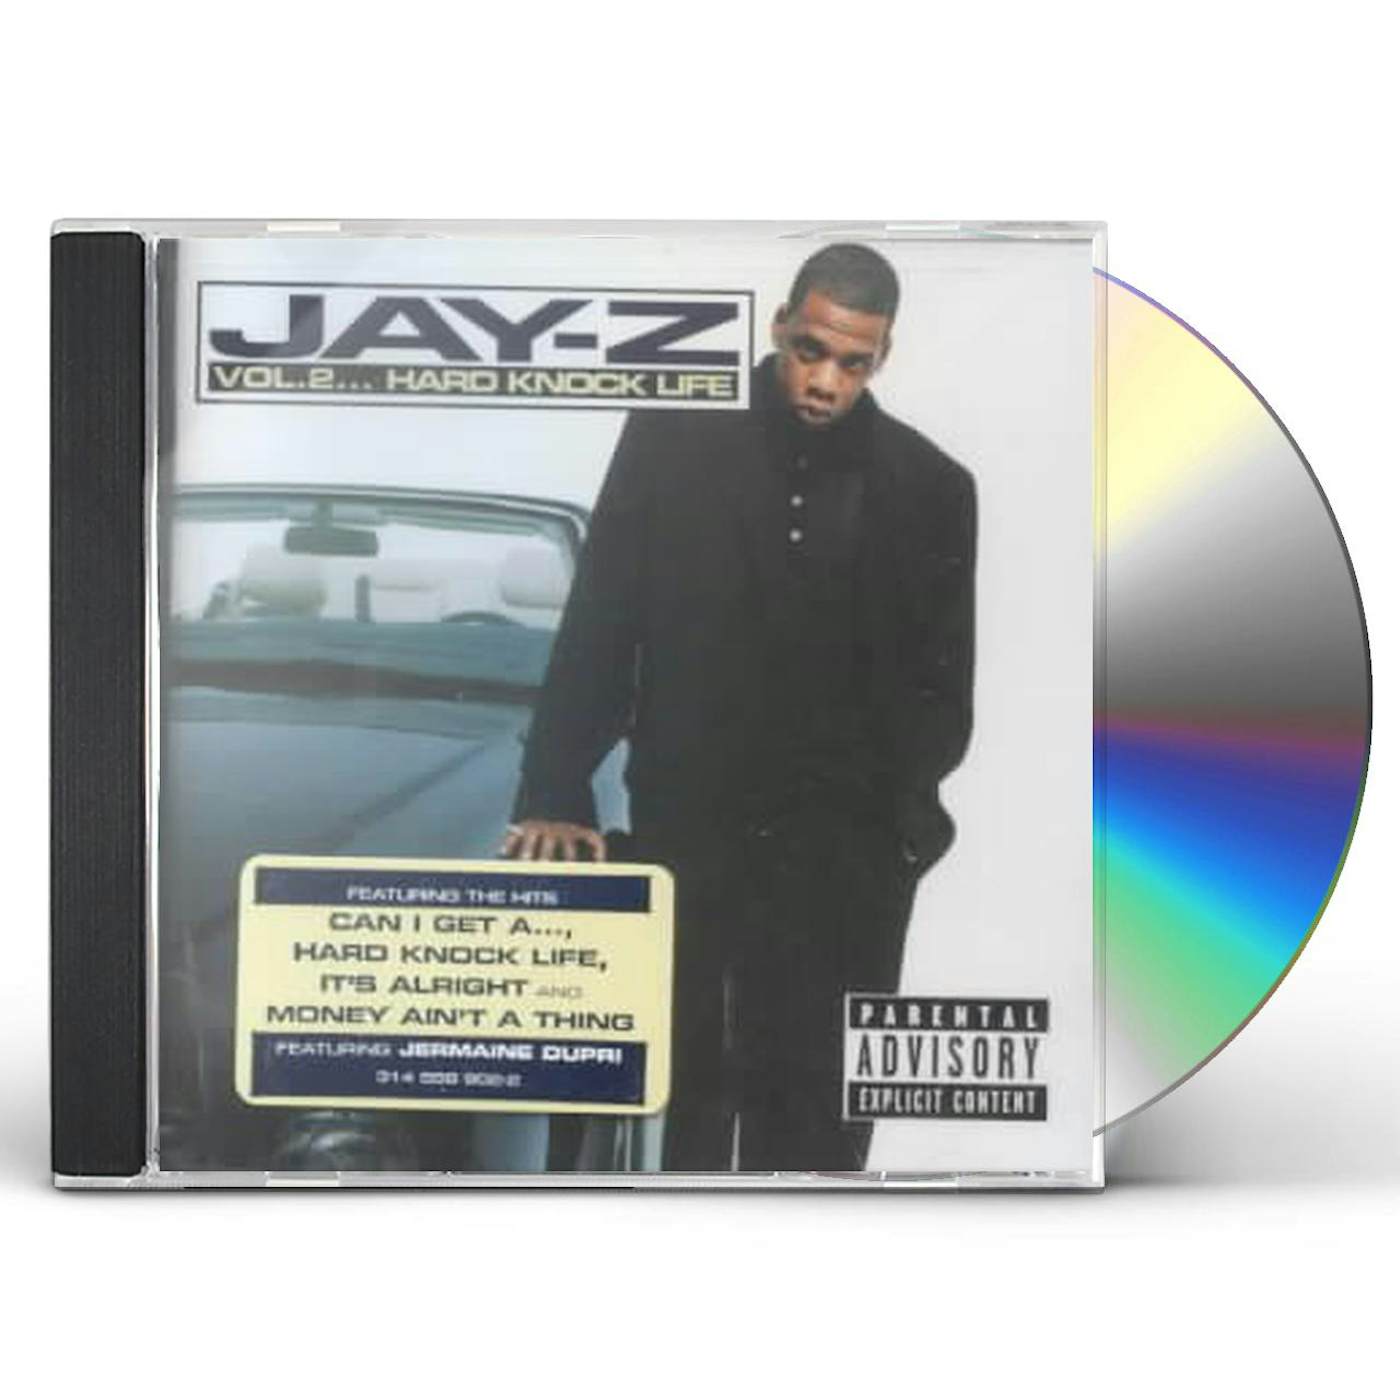 Volume 2: Hard Knock Life by Jay-Z (CD, 1998)